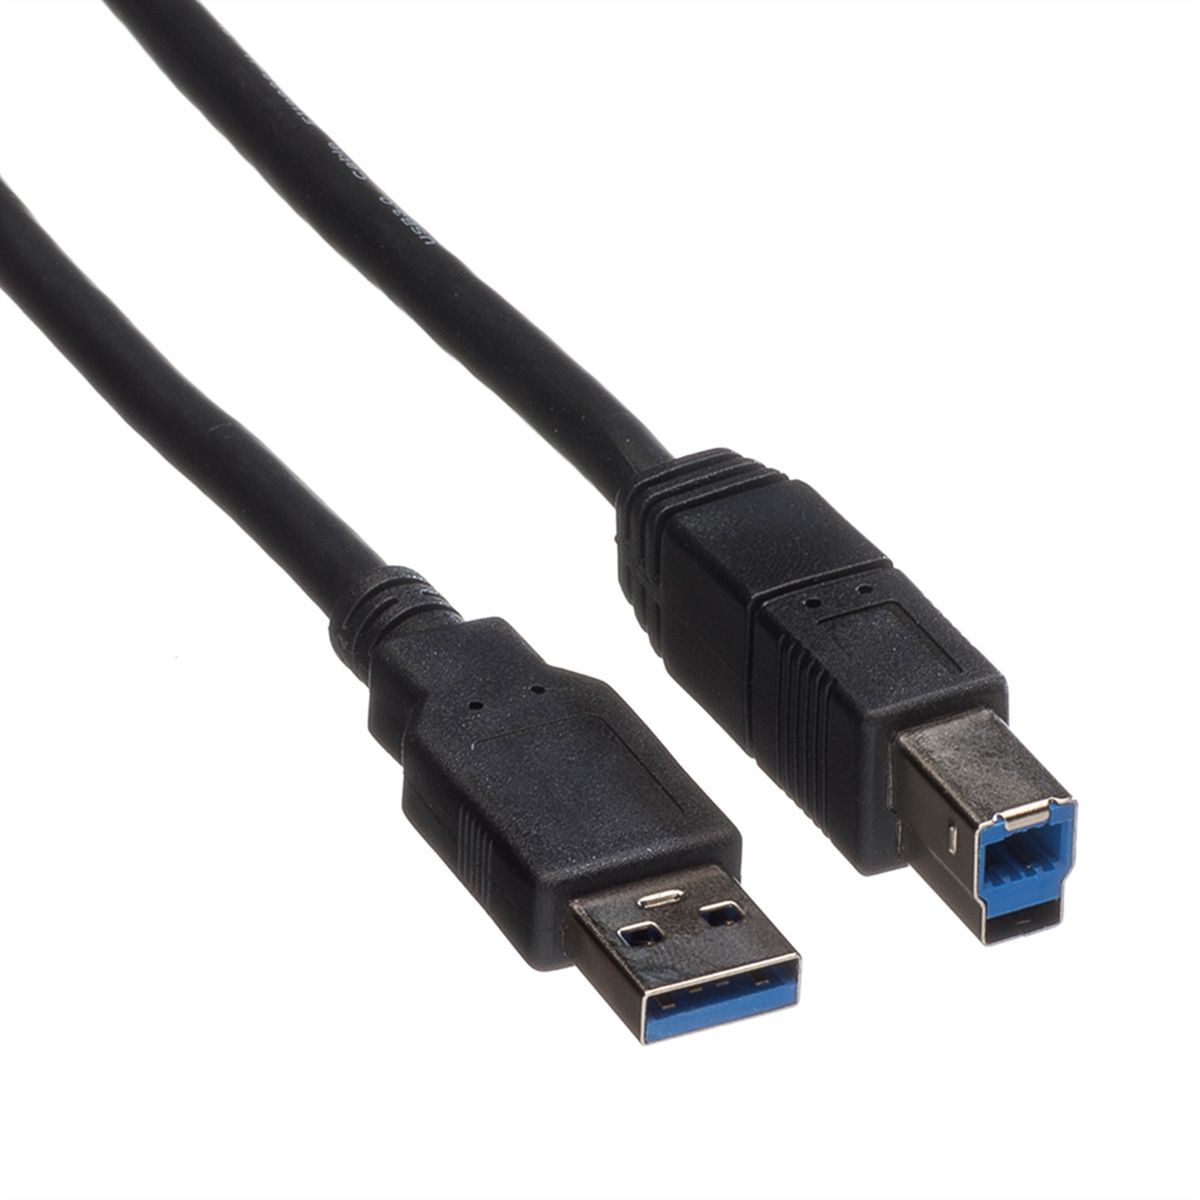 Usb 2.0 usb 3.2 gen1. Кабель USB 3.1 Gen 2. USB 3.2 gen1 Type-a. USB 3.2 Gen 1 Type a кабель. USB 3.1 gen2 Connectors (USB 3.1 Typ a).